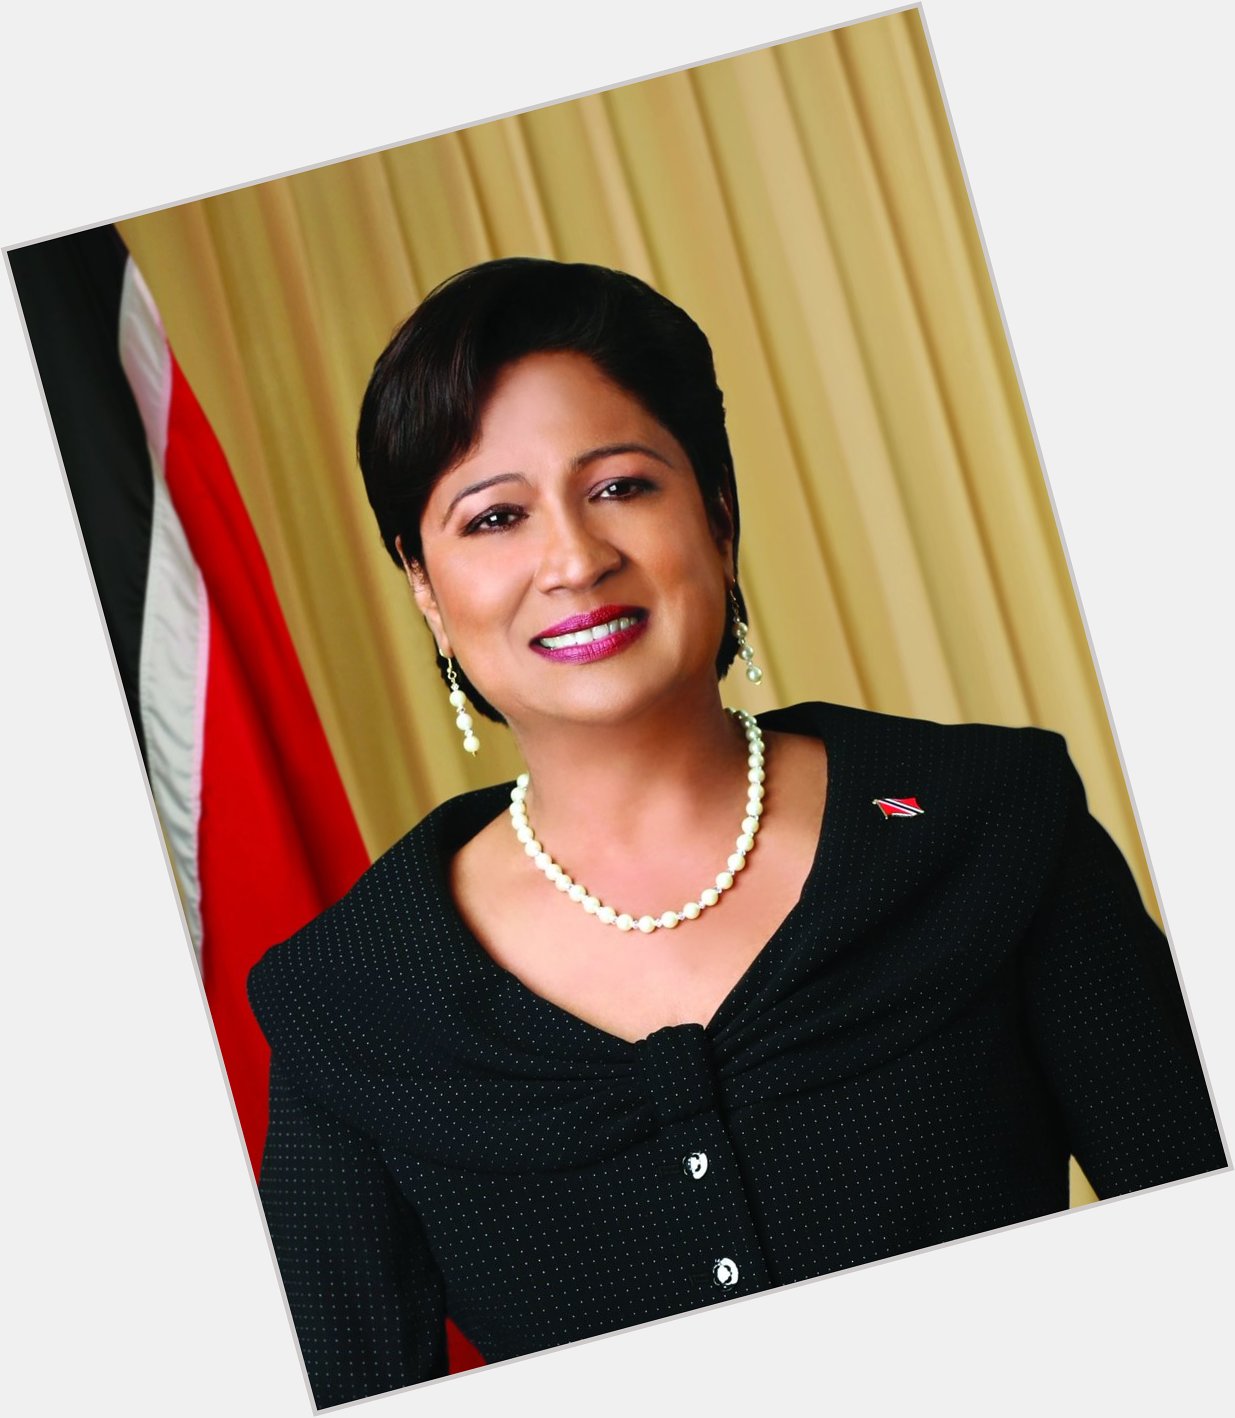 Happy Birthday, Kamla Persad-Bissessar  ; 7th Prime Minister of Trinidad & Tobago PM 